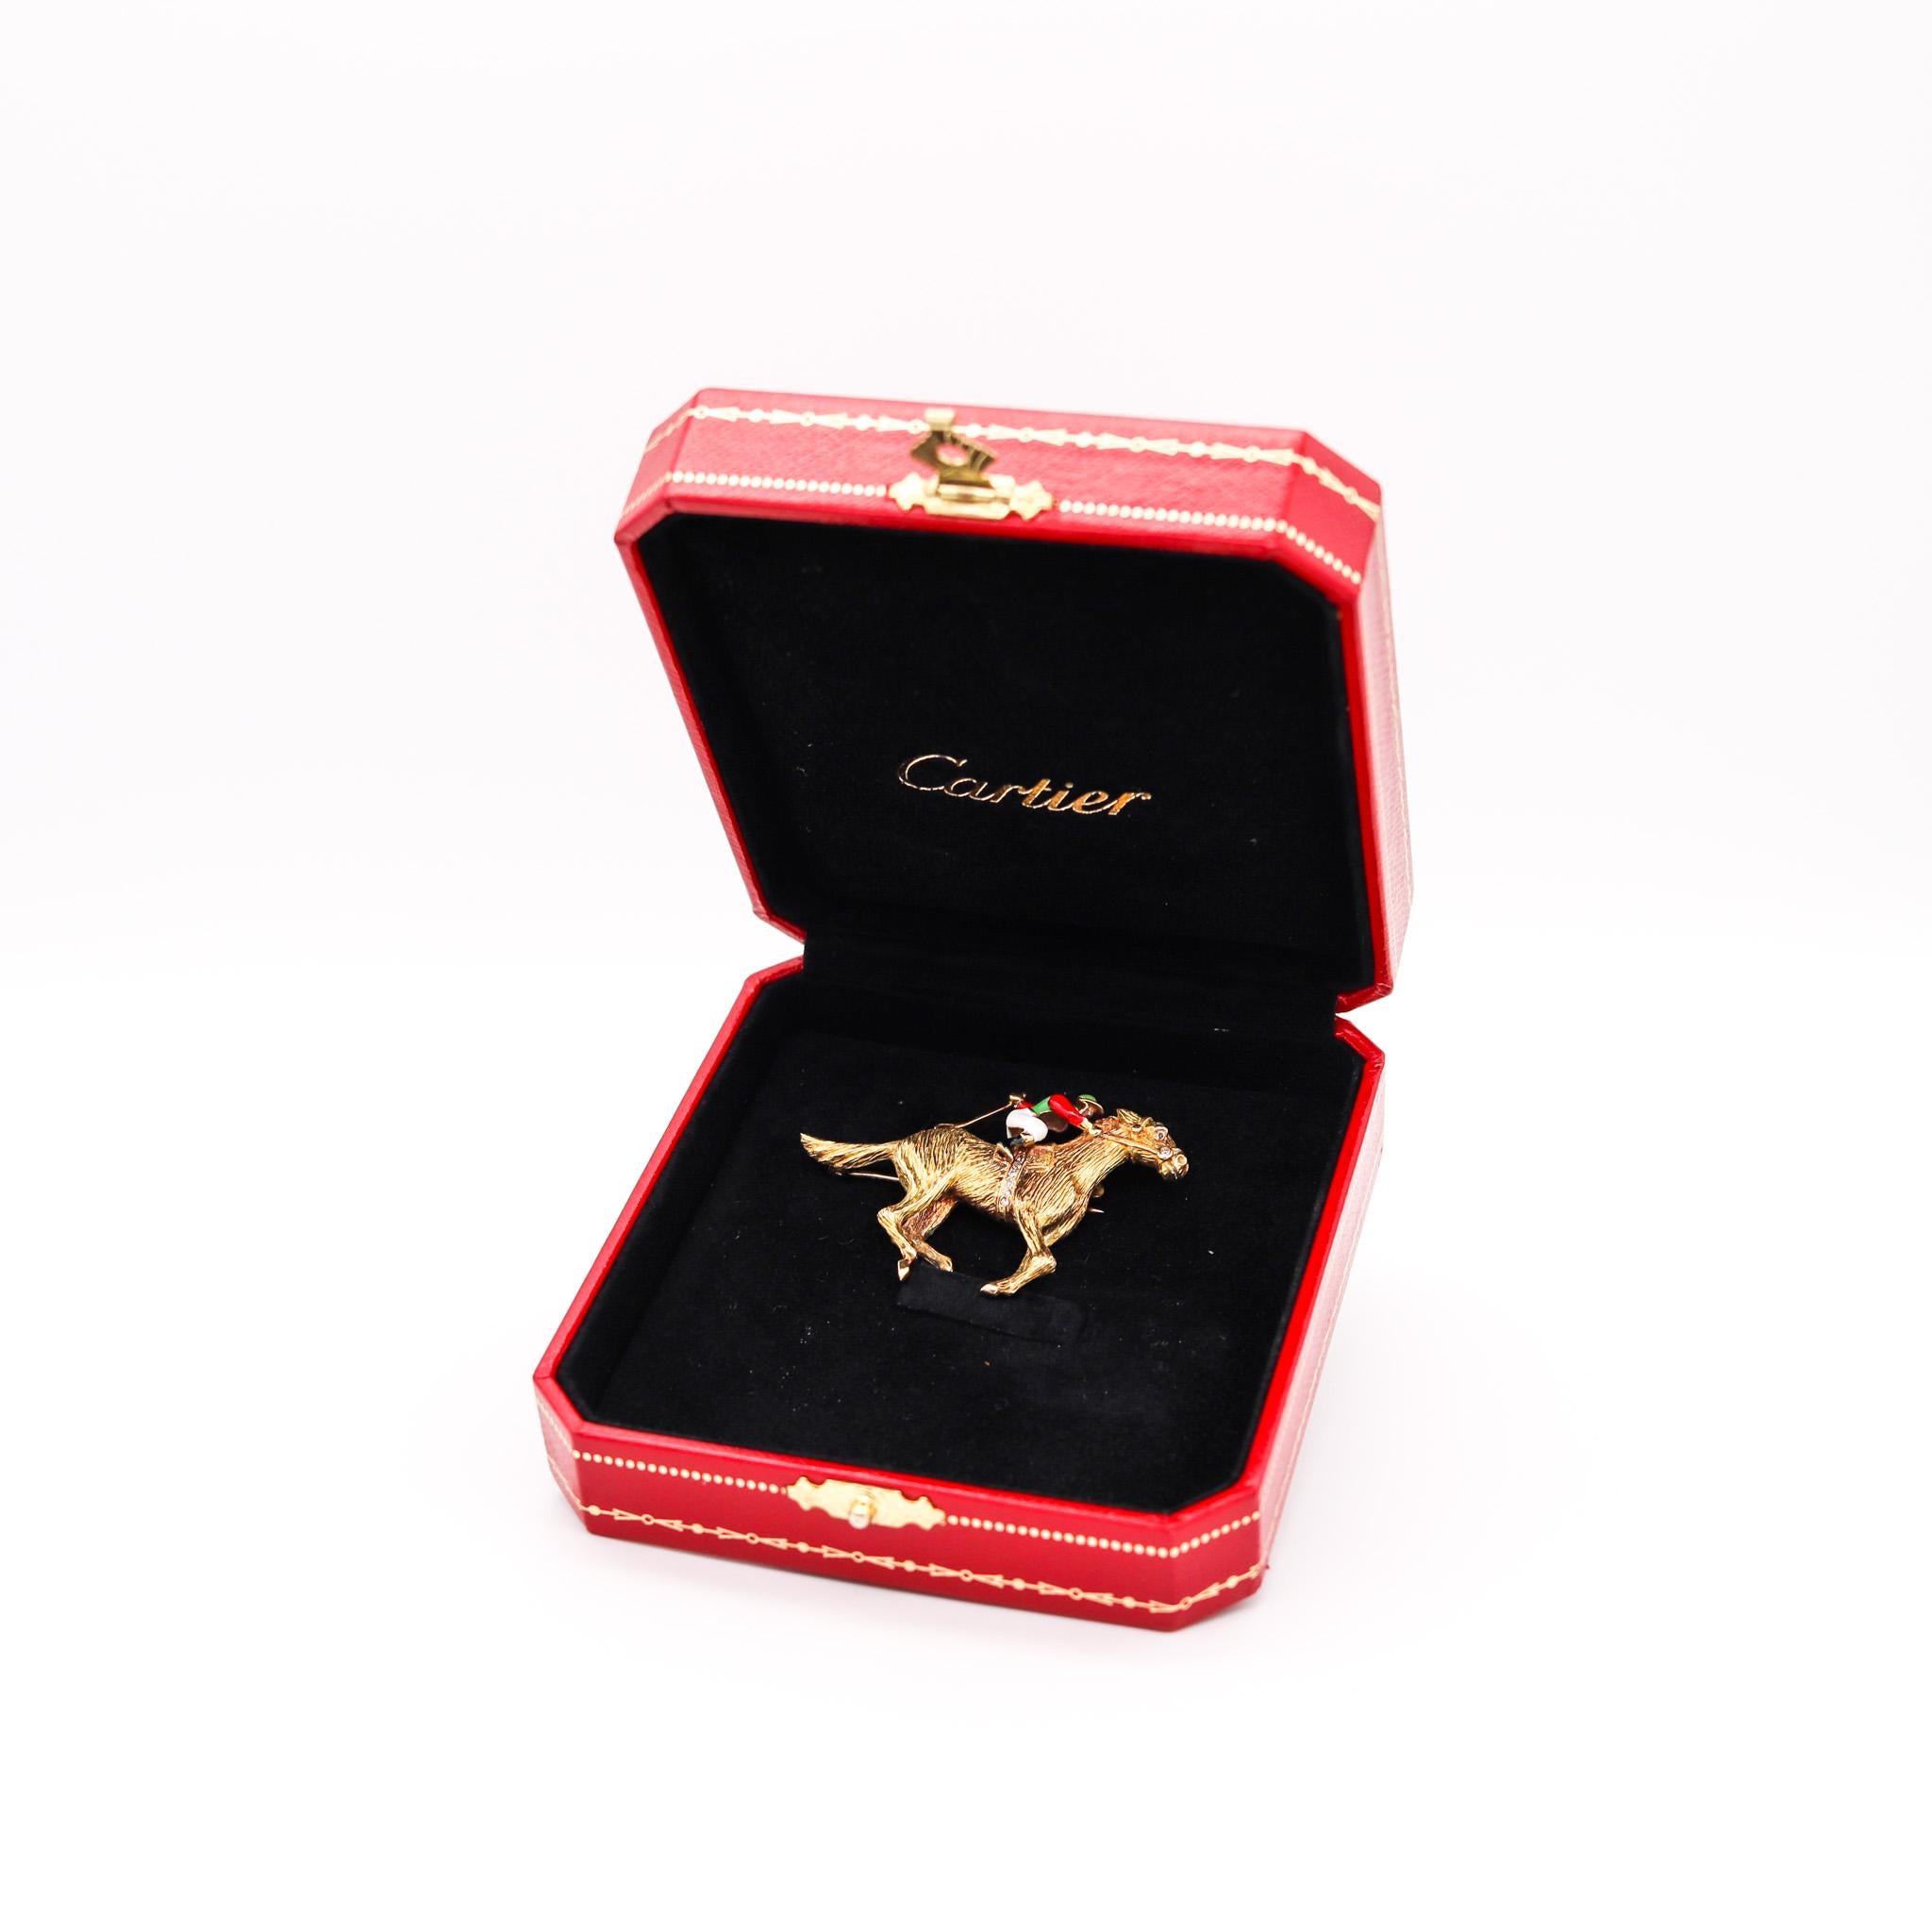 Cartier 1940 Deco Enameled Racing Horse Jockey Brooch in 18kt Gold with Diamonds 4